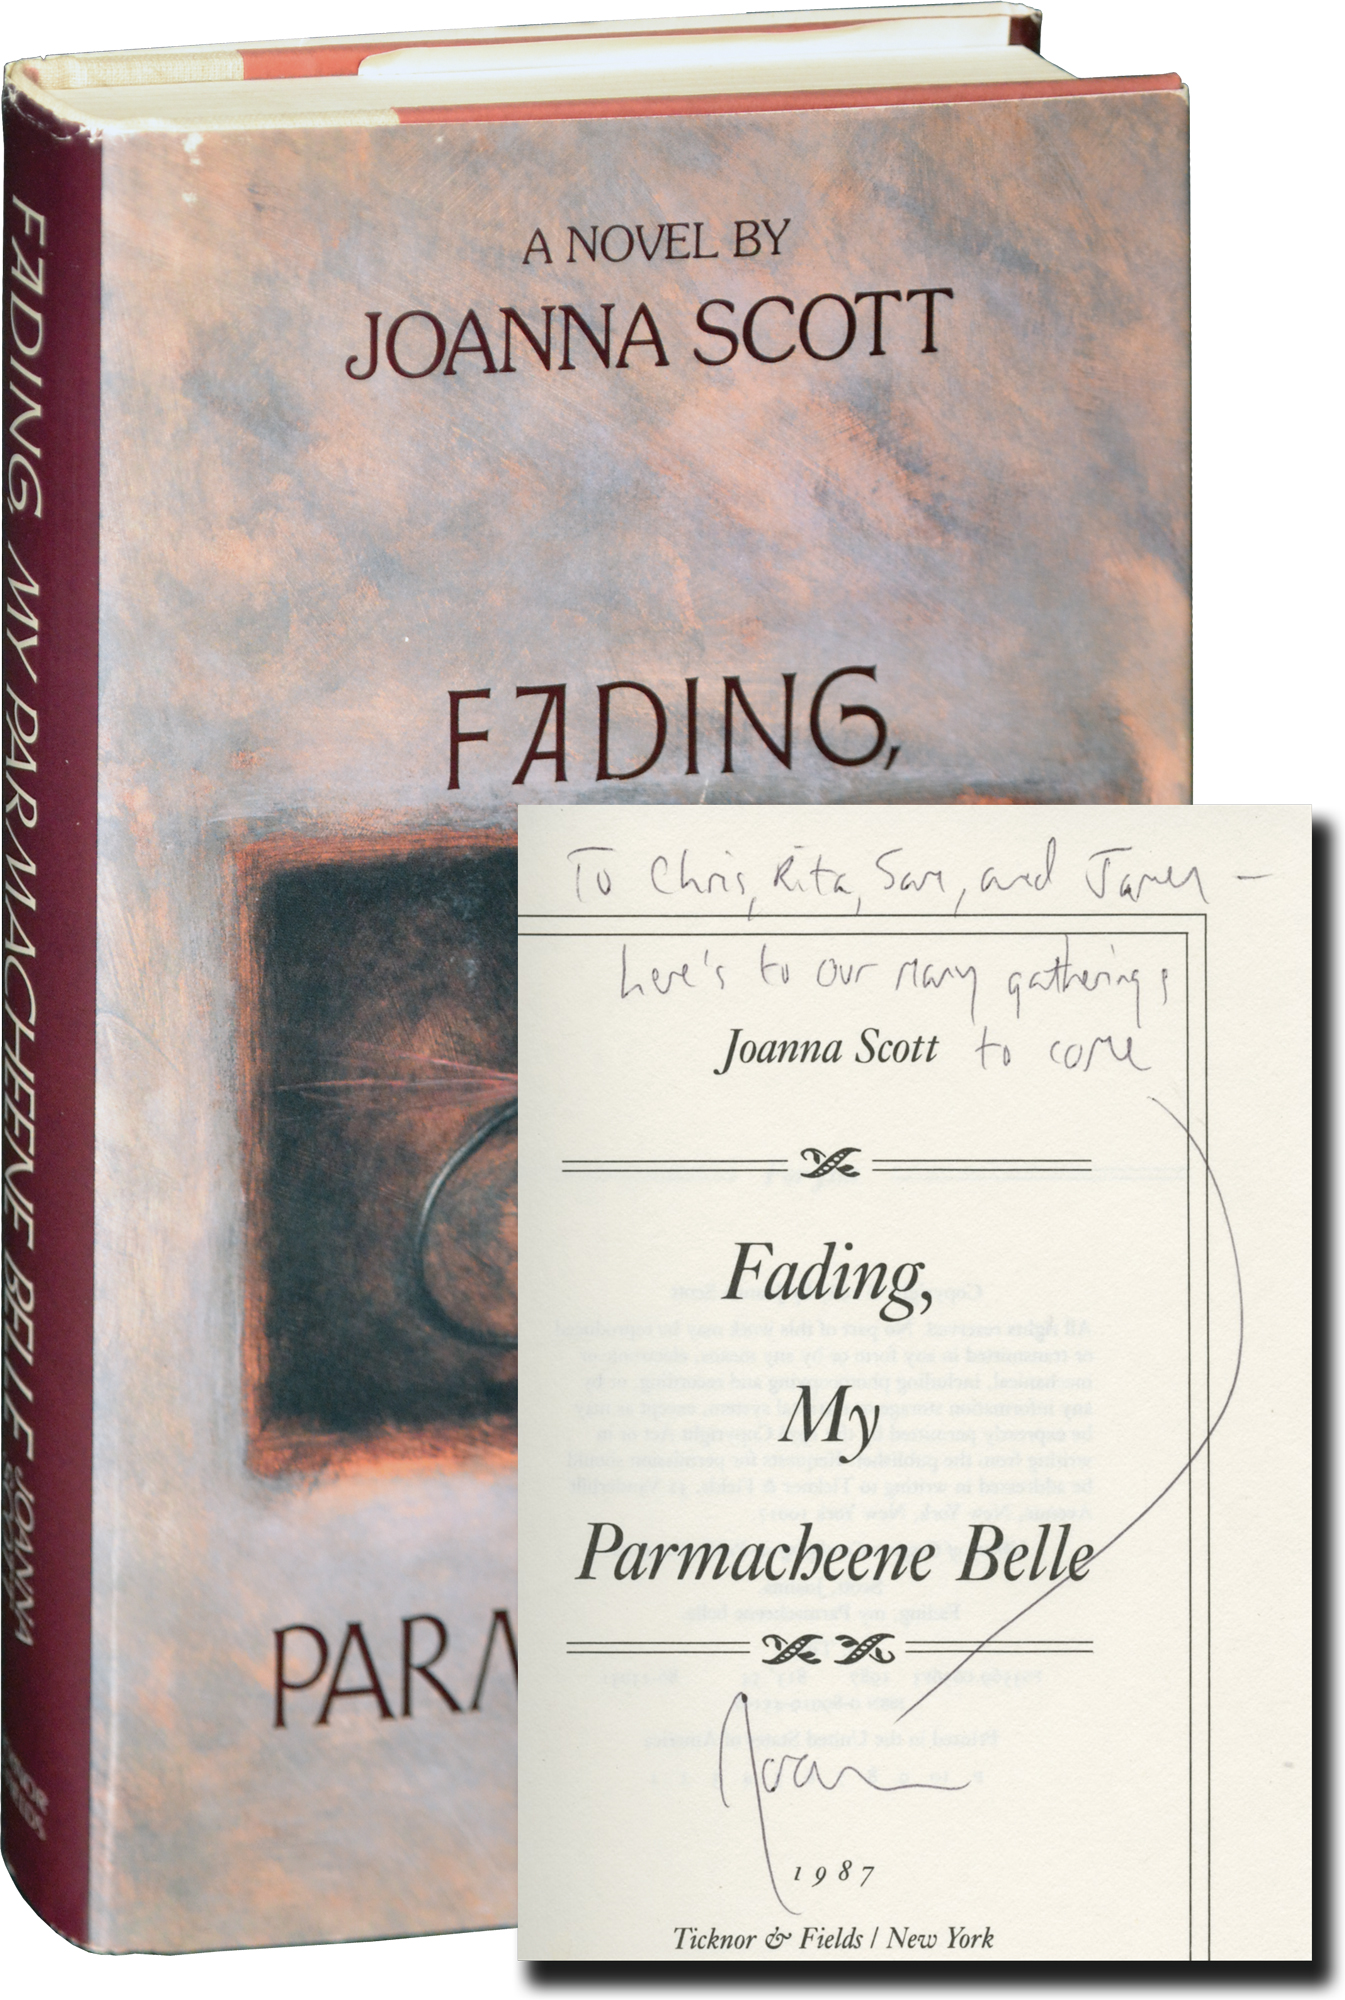 Fading, My Parmacheene Belle (First Edition, inscribed to fellow author Chris Offutt) - Joanna Scott